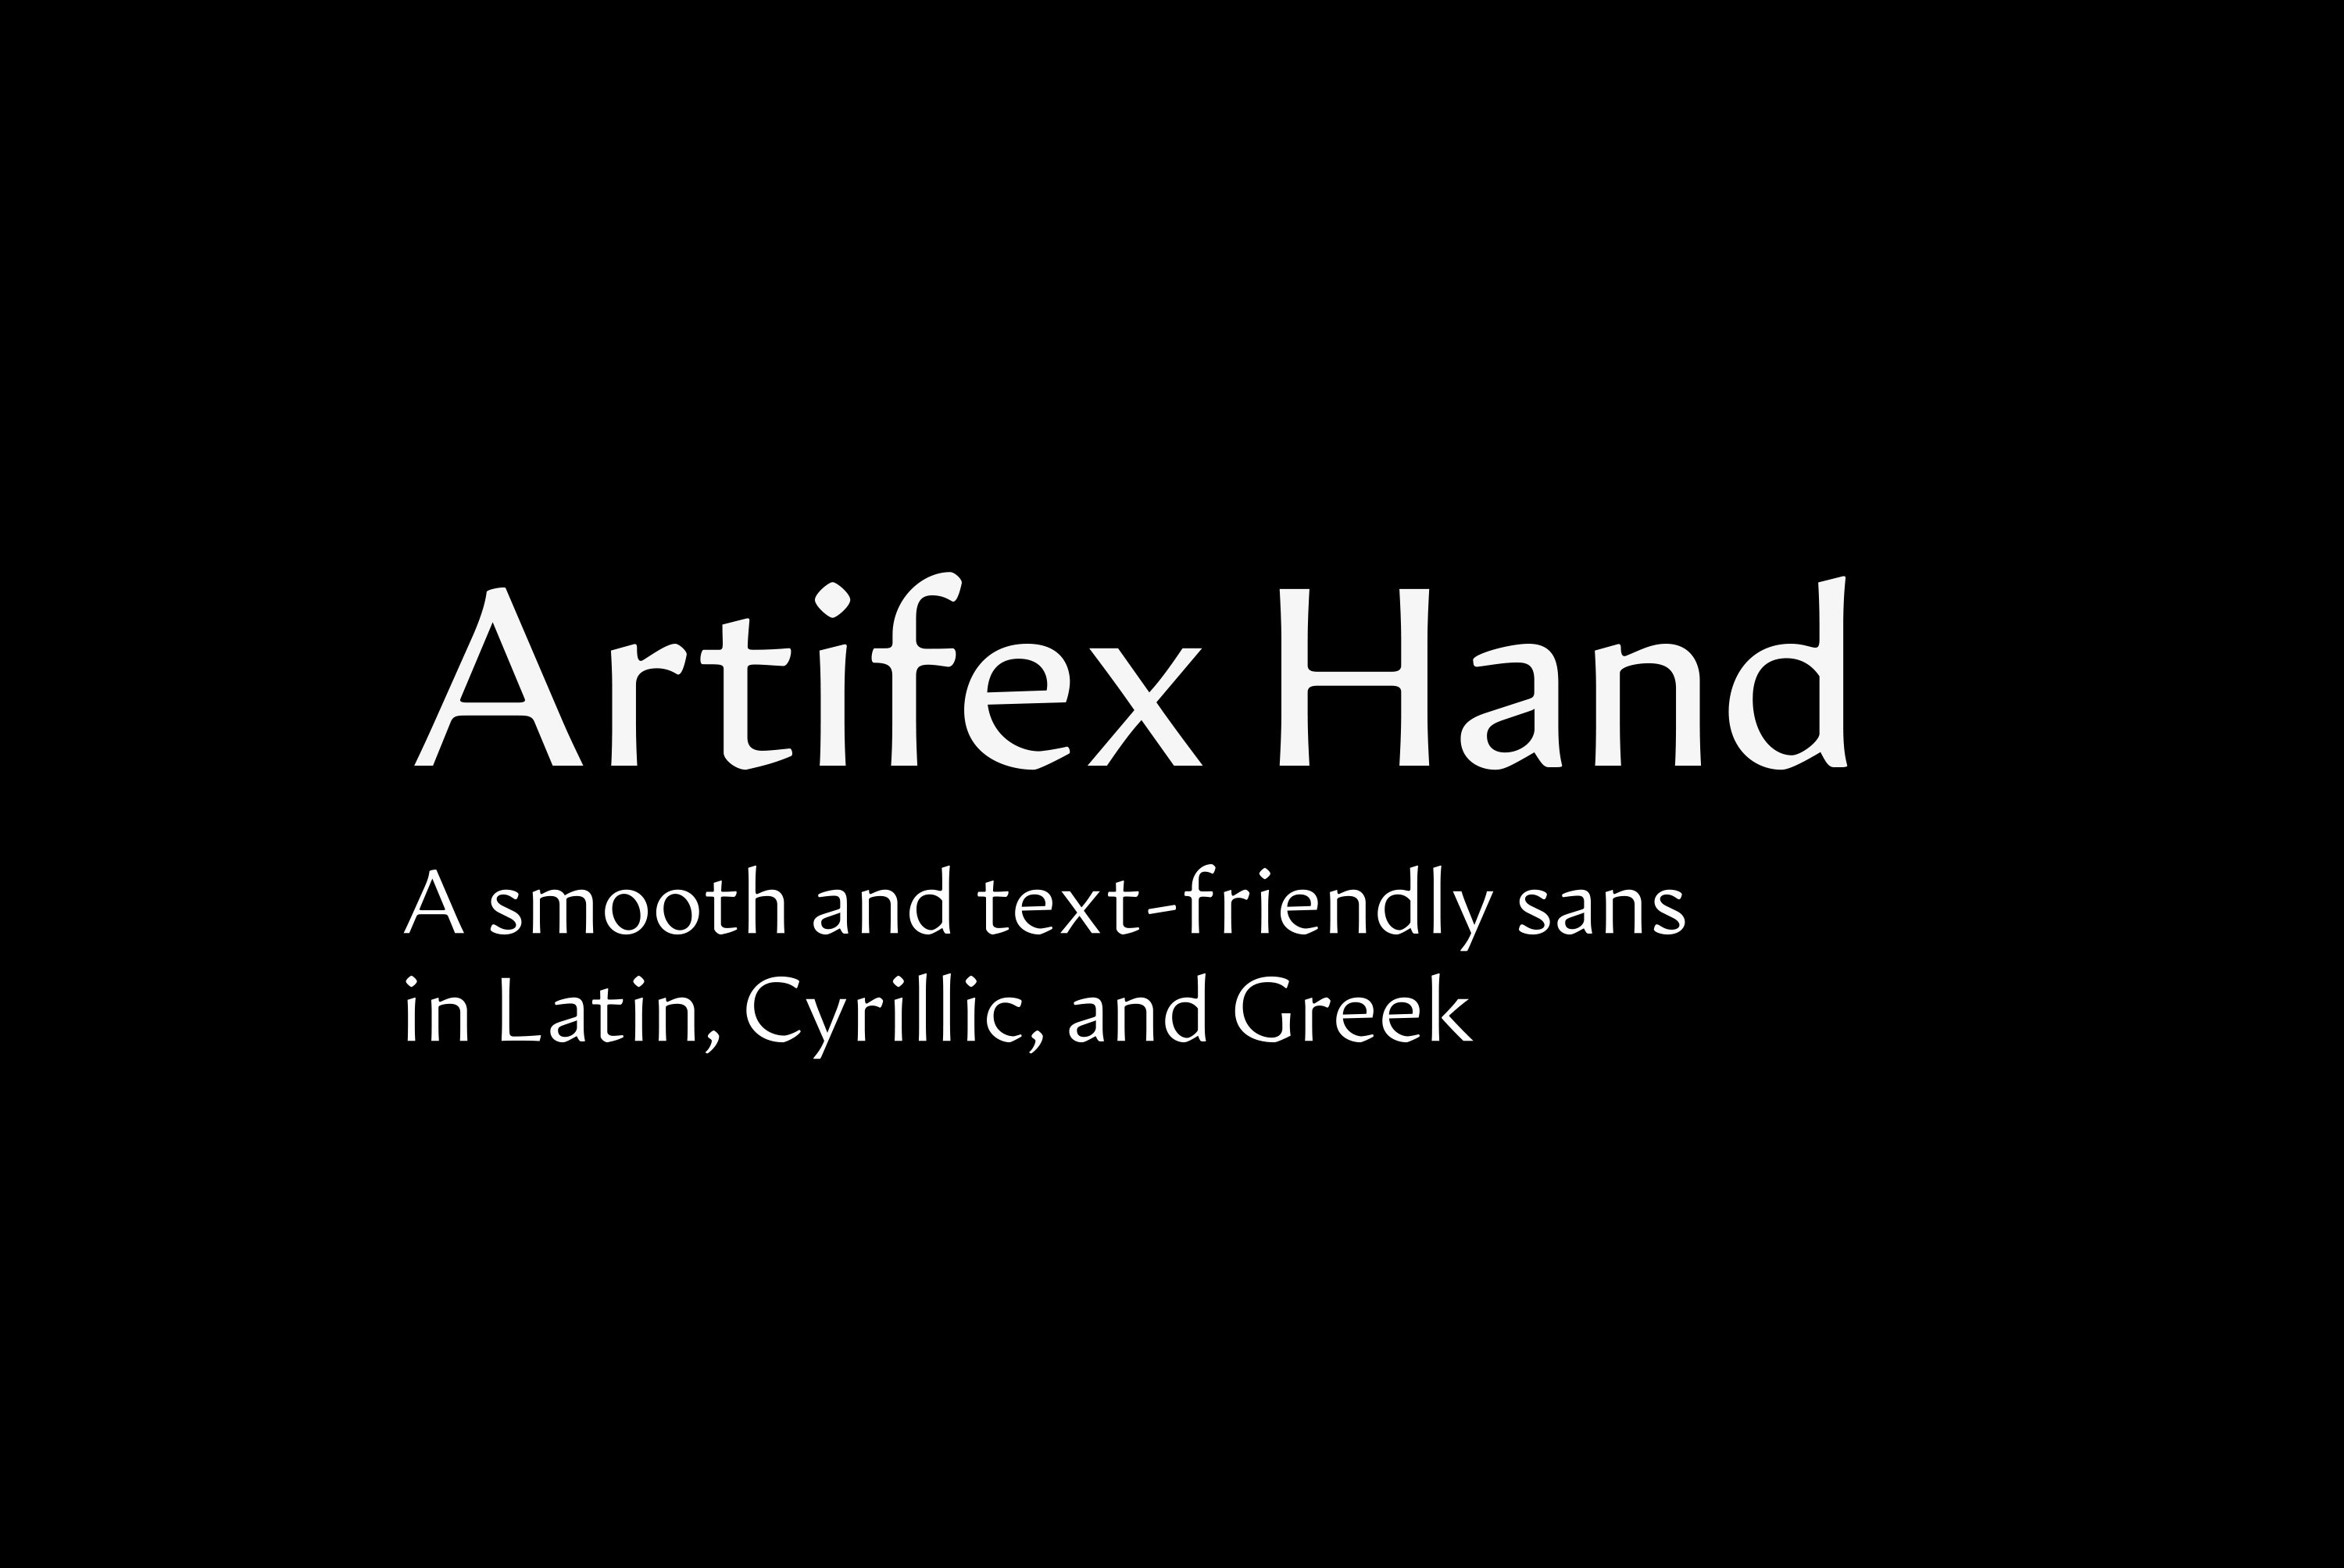 Artifex Hand CF sans serif font cover image.